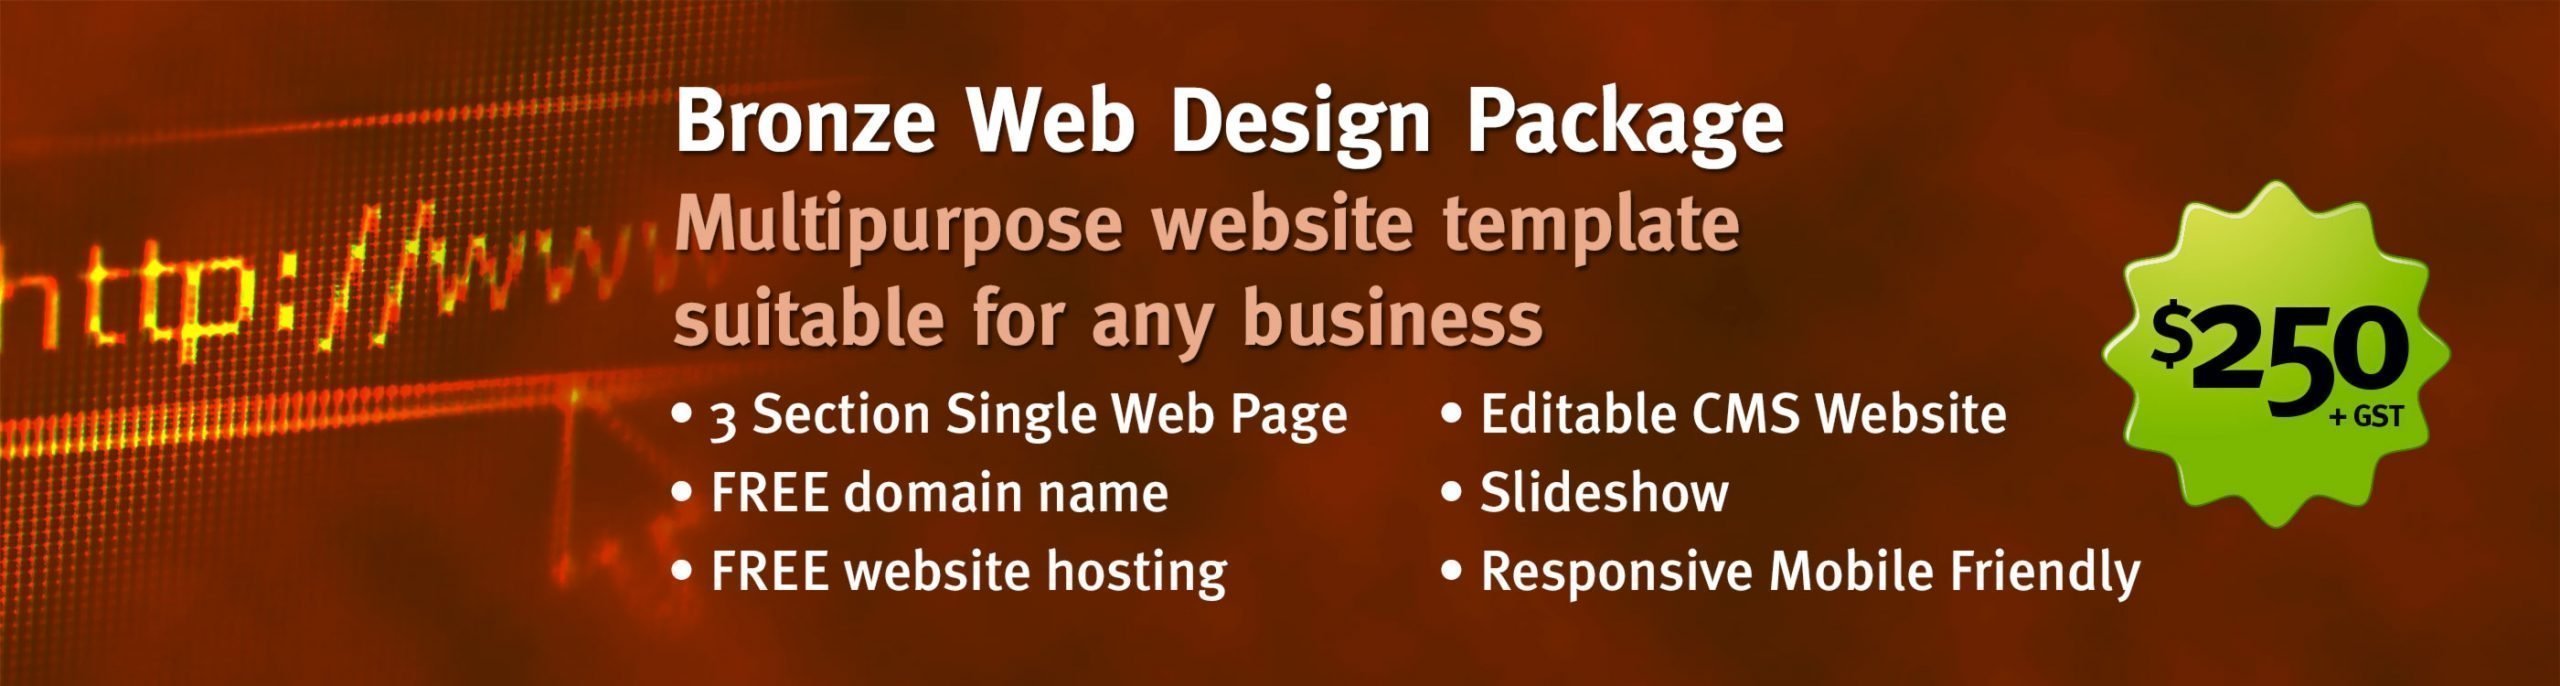 website design bronze package scaled